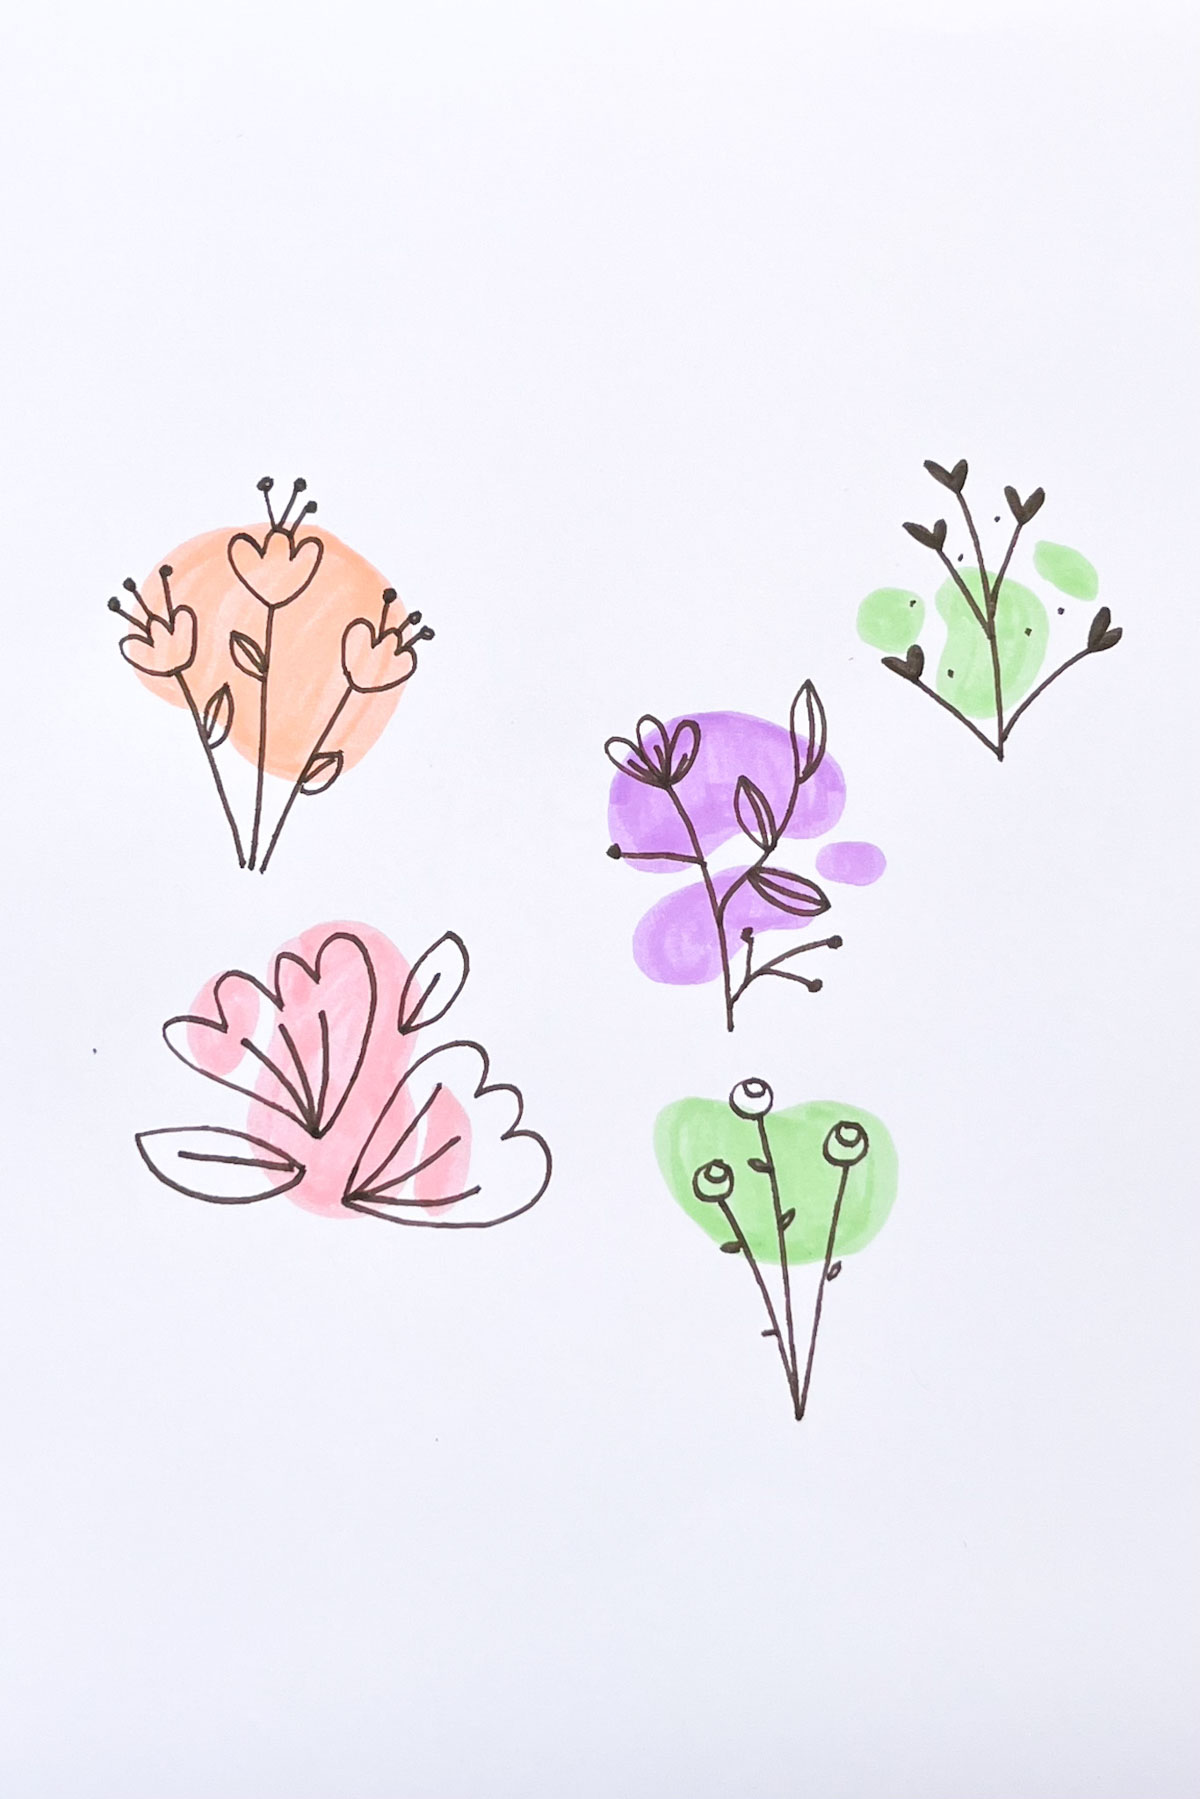 blot flower drawing ideas